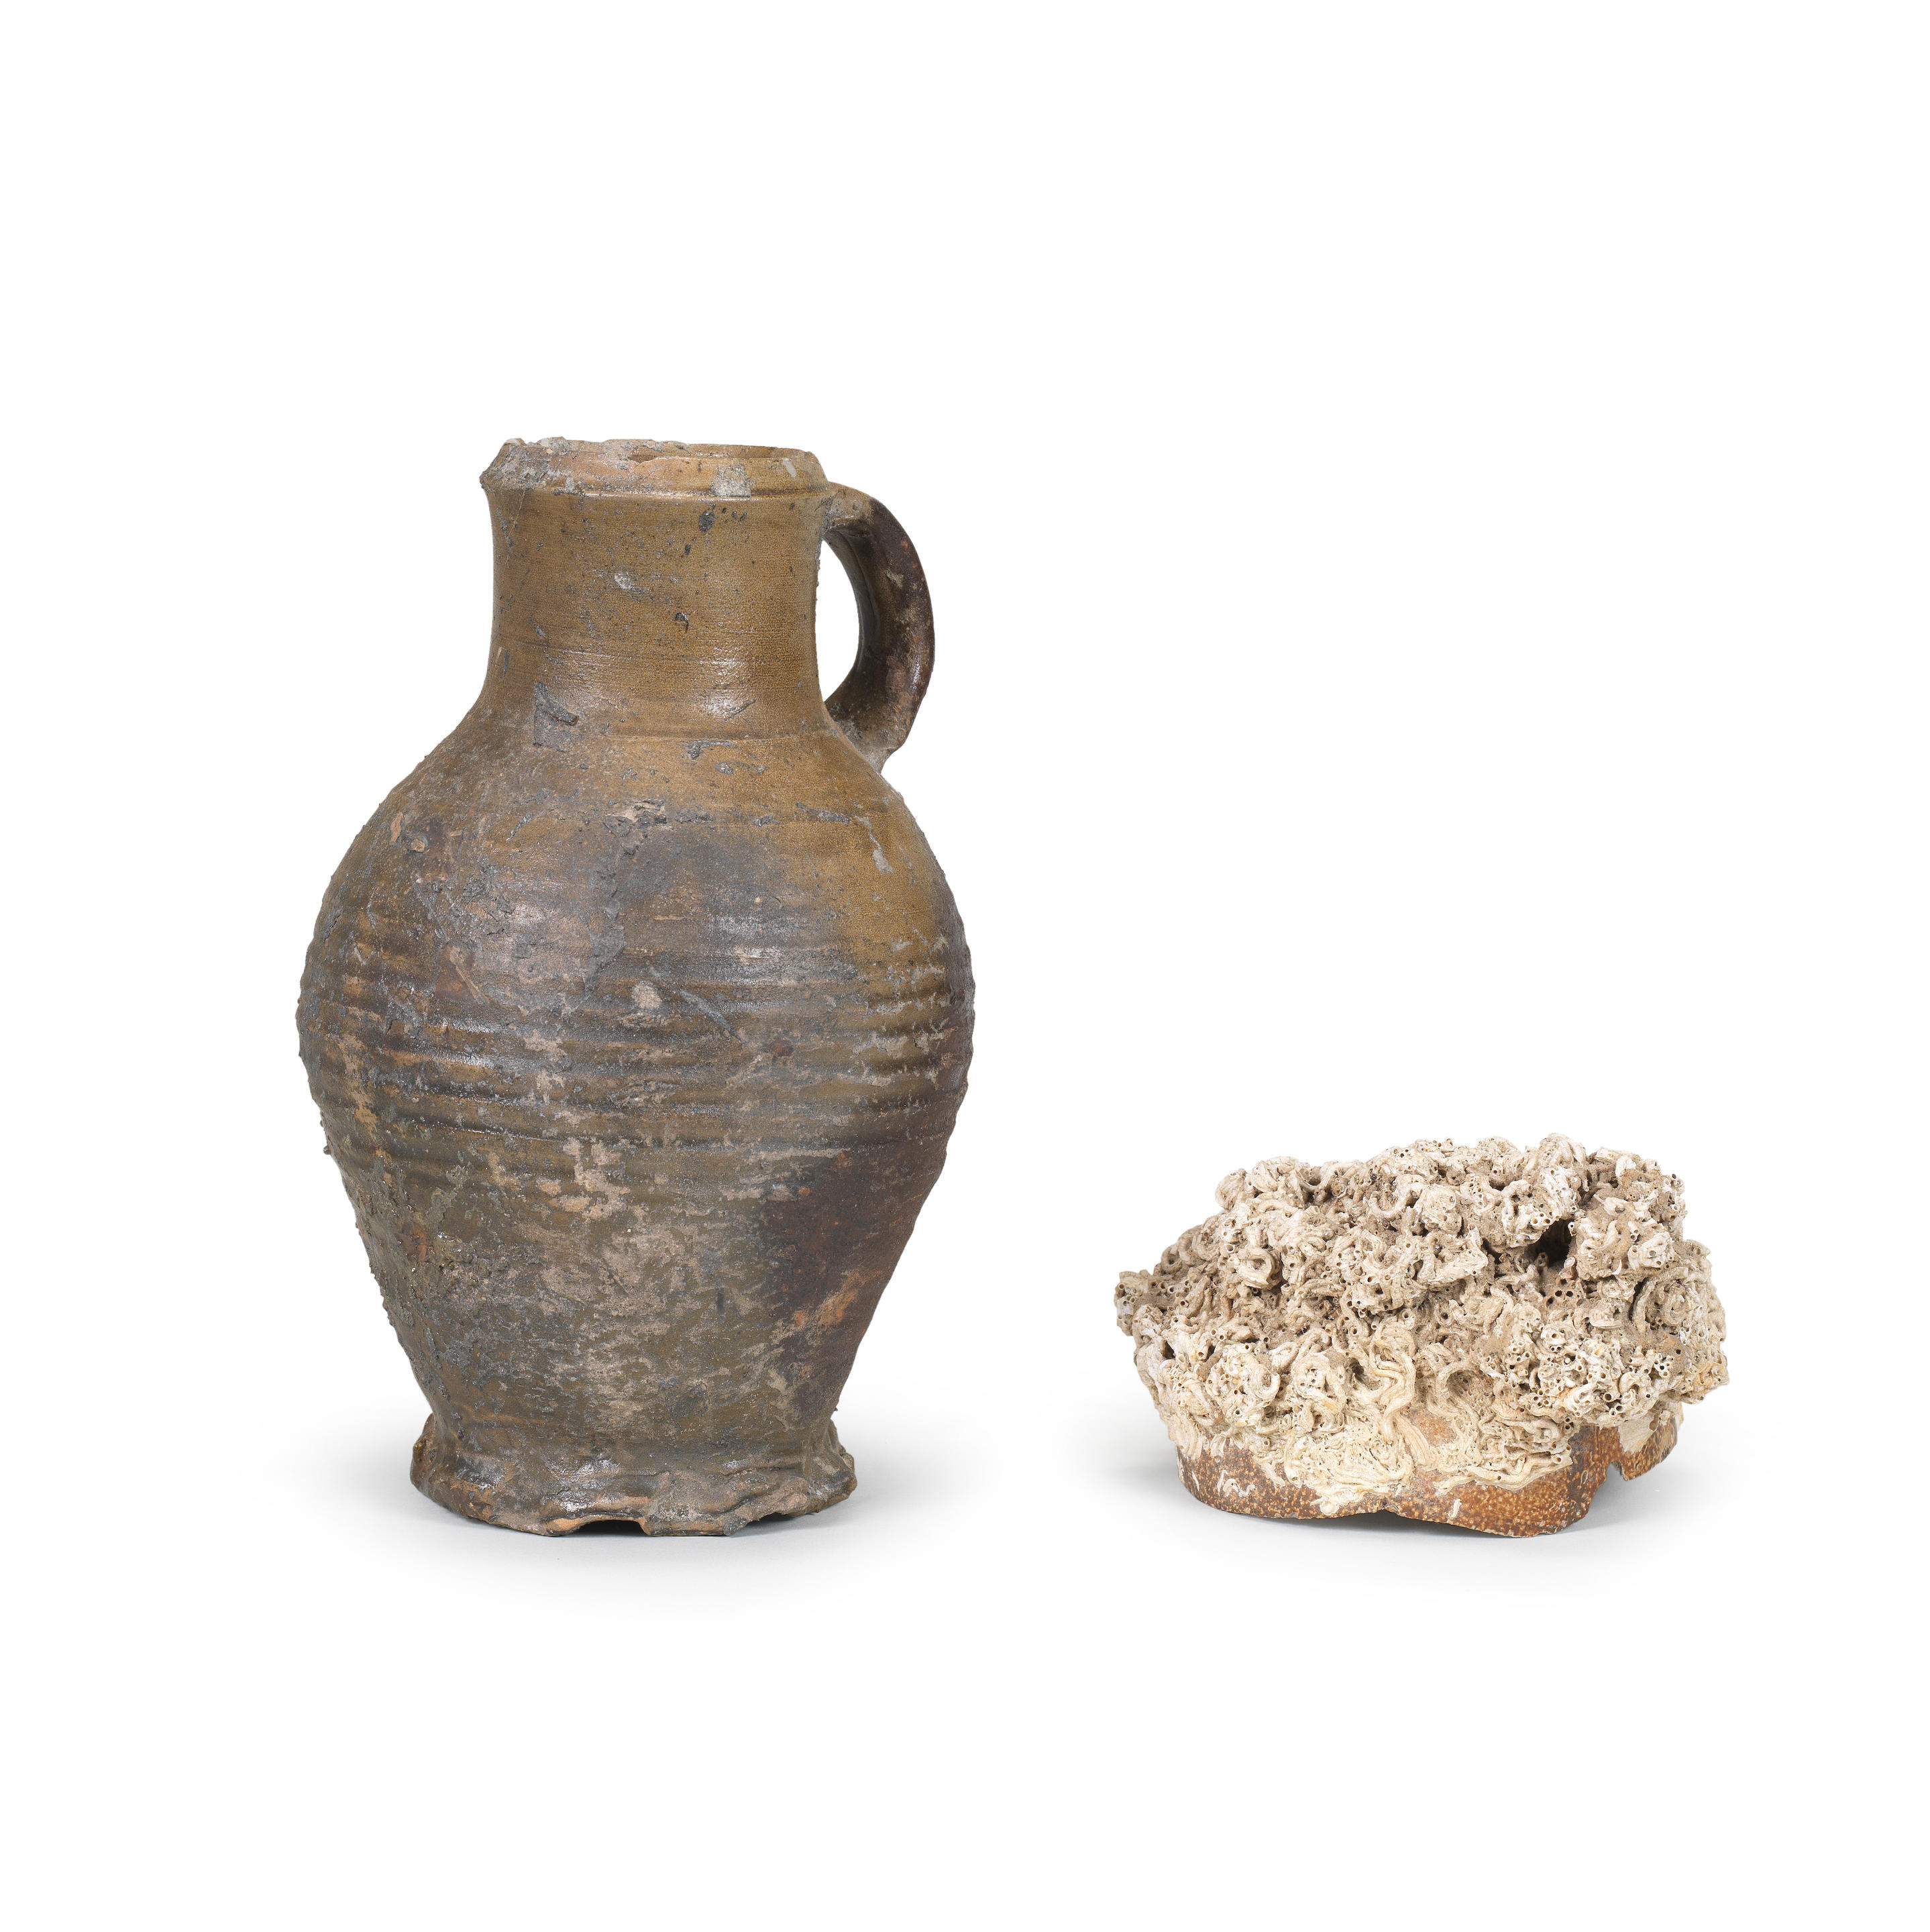 A Rhineland stoneware jug together with an encrusted stoneware shard